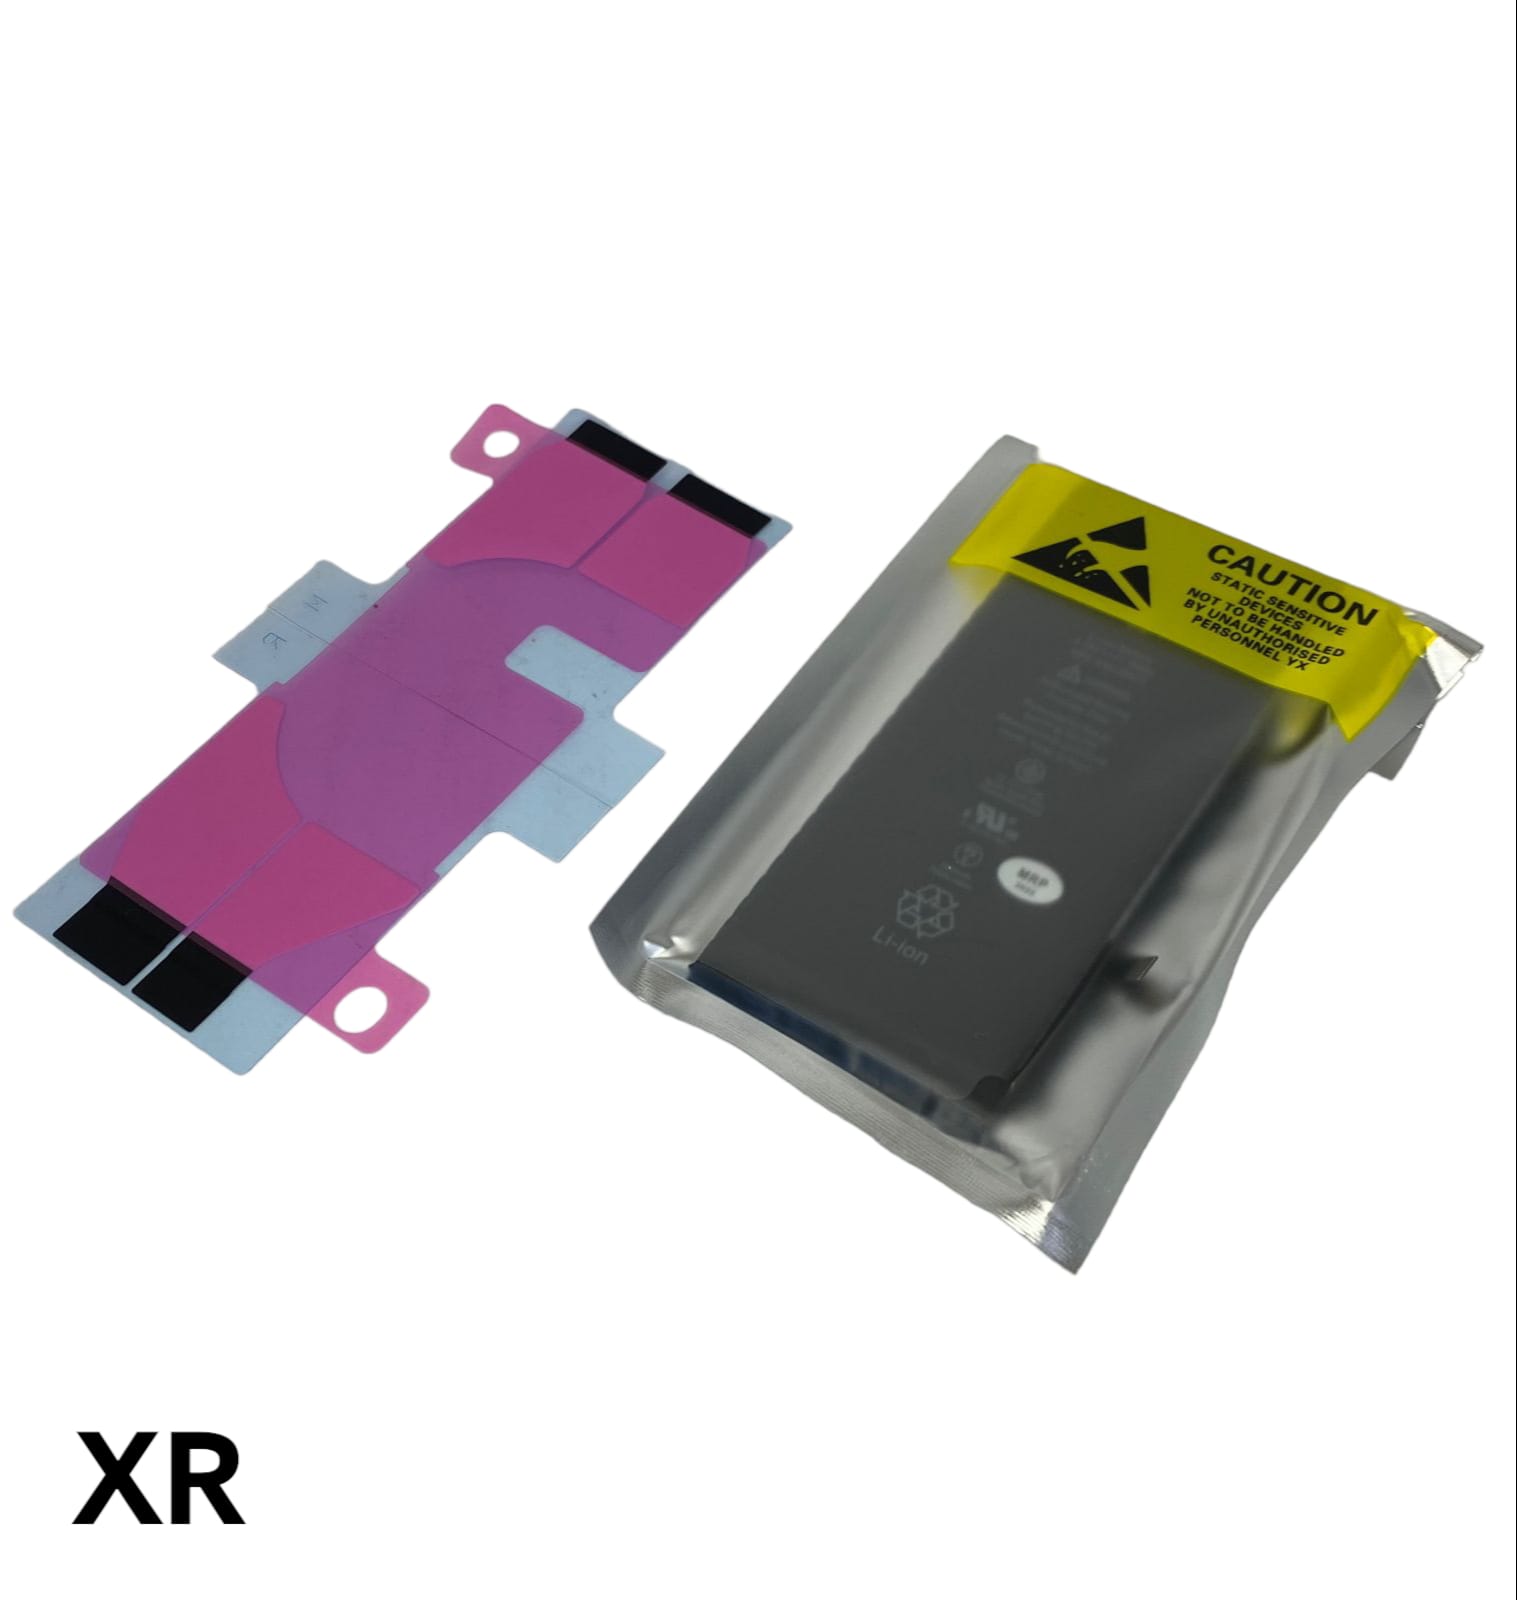 Bateria Repuesto Iphone Xr - Luegopago